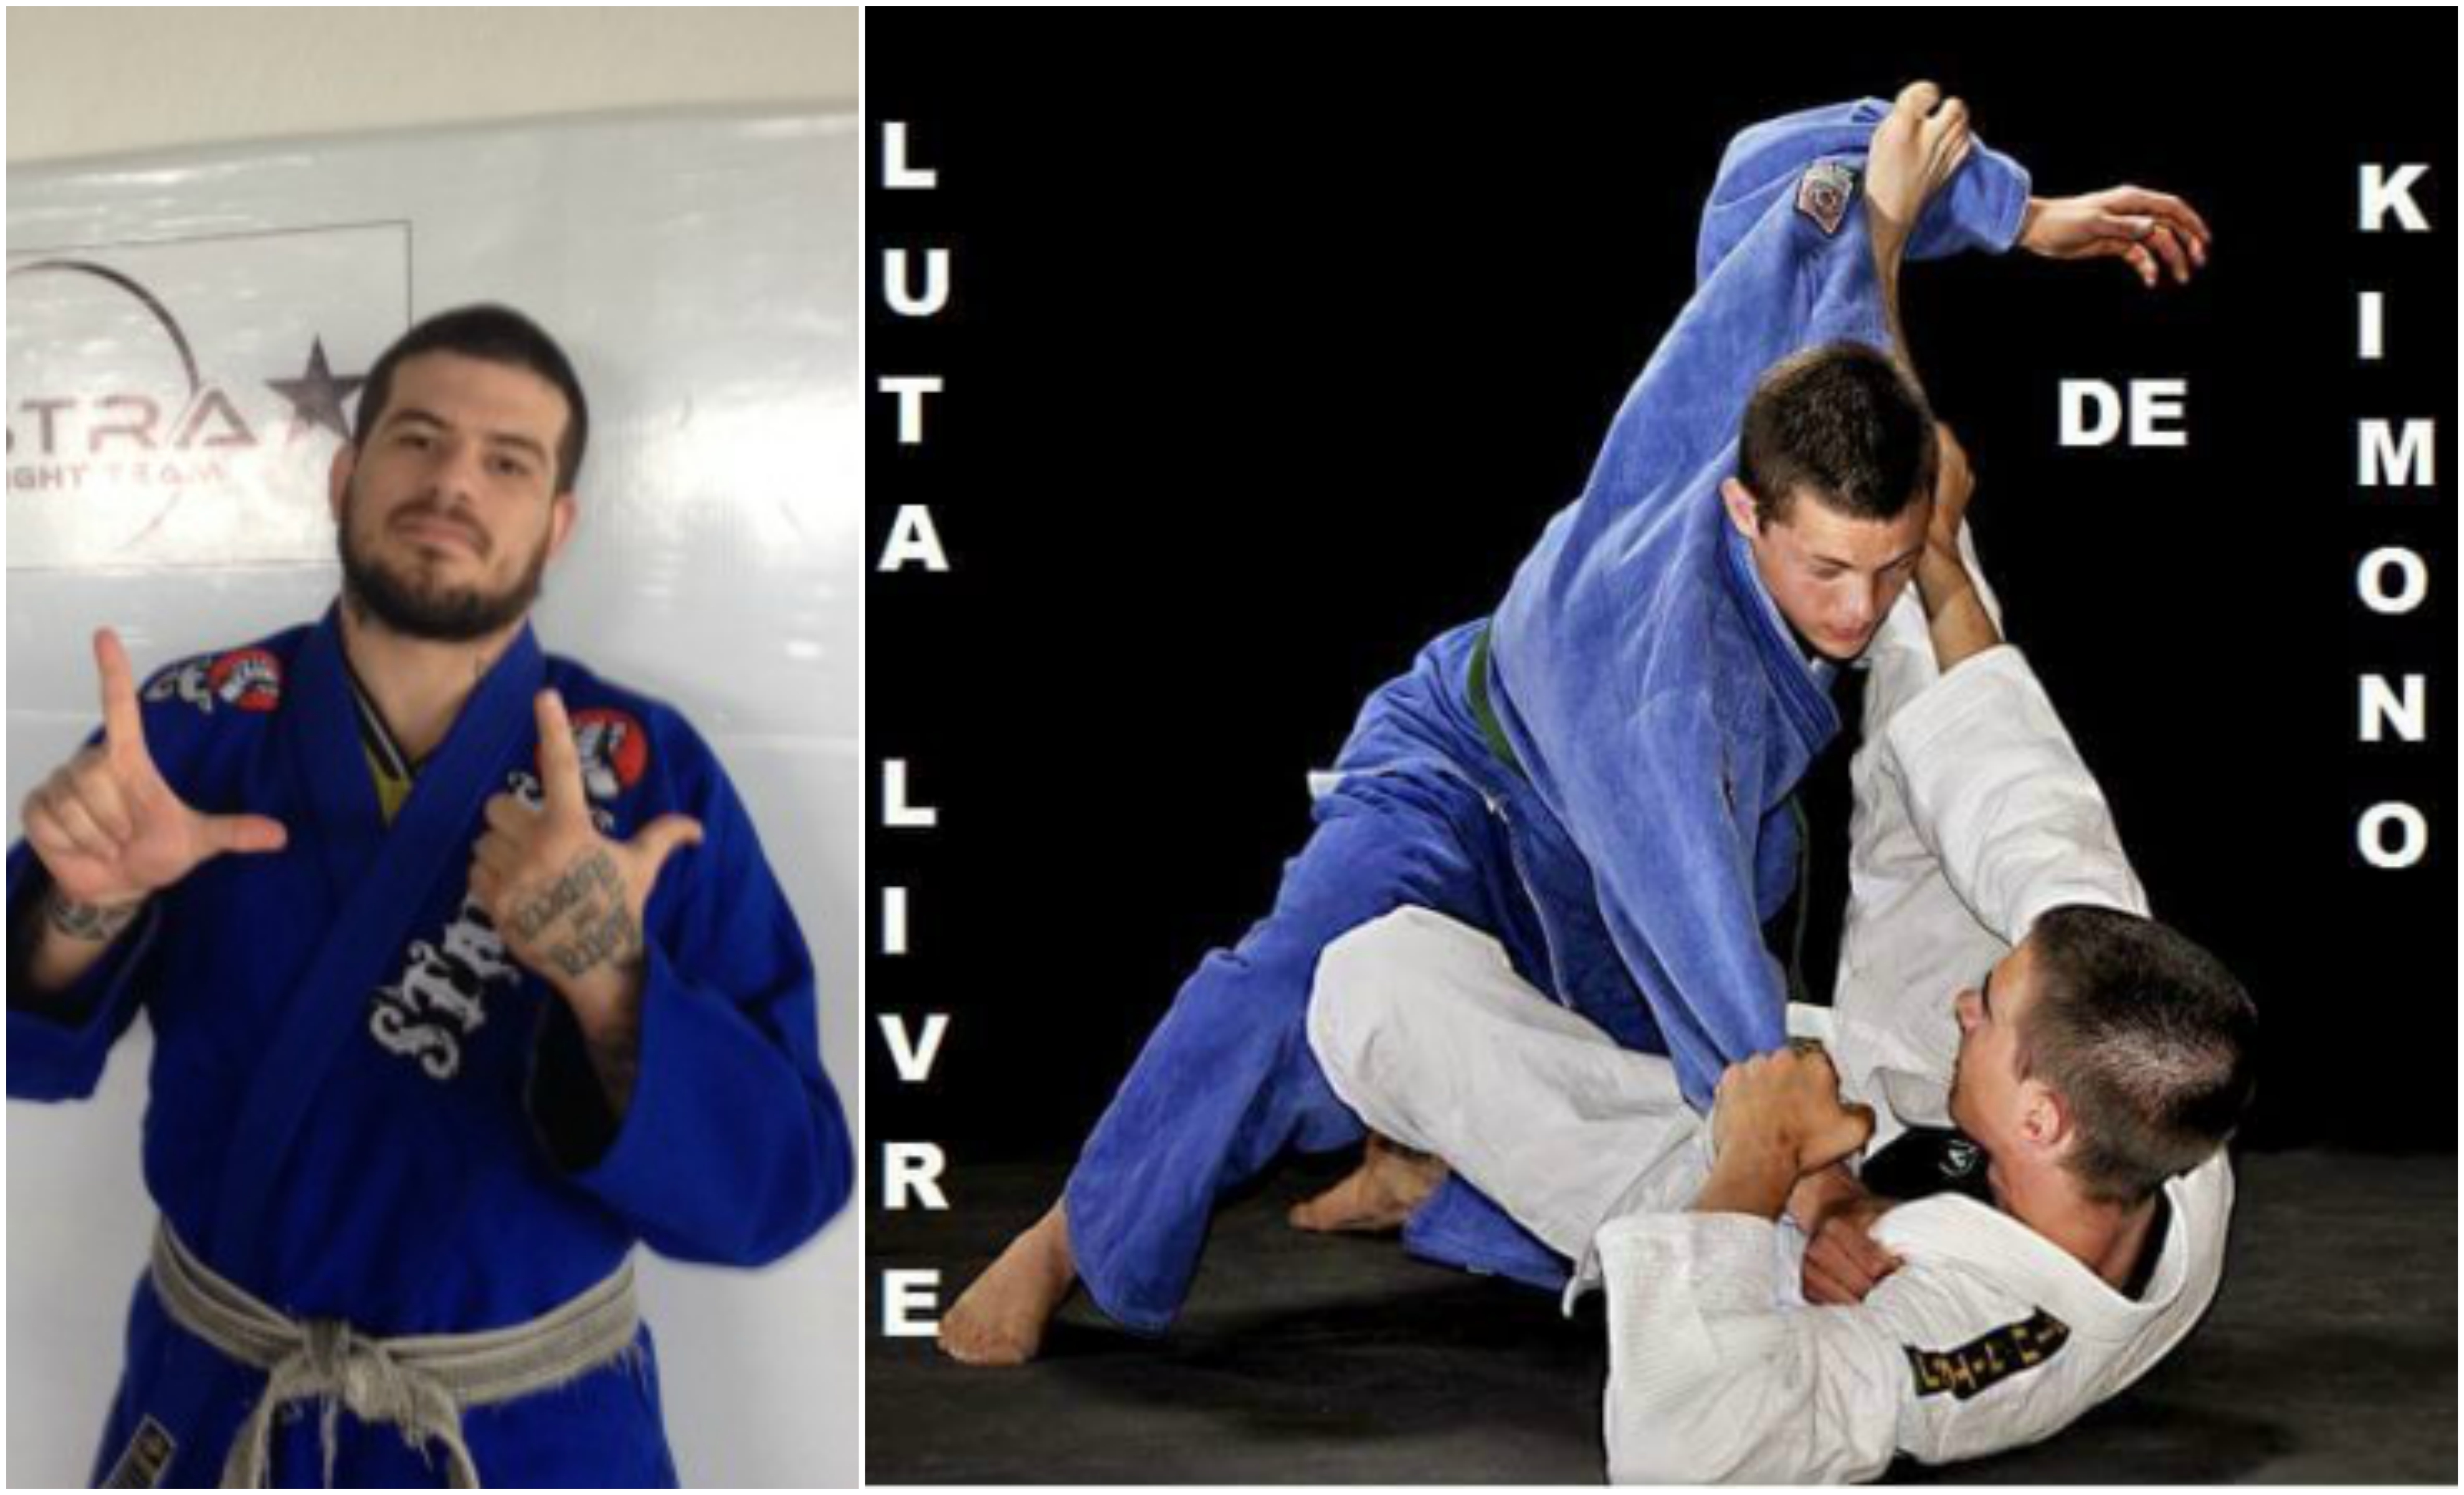 About BJJ – Brigadeiro Jiu-Jitsu – Academy – Self Defense